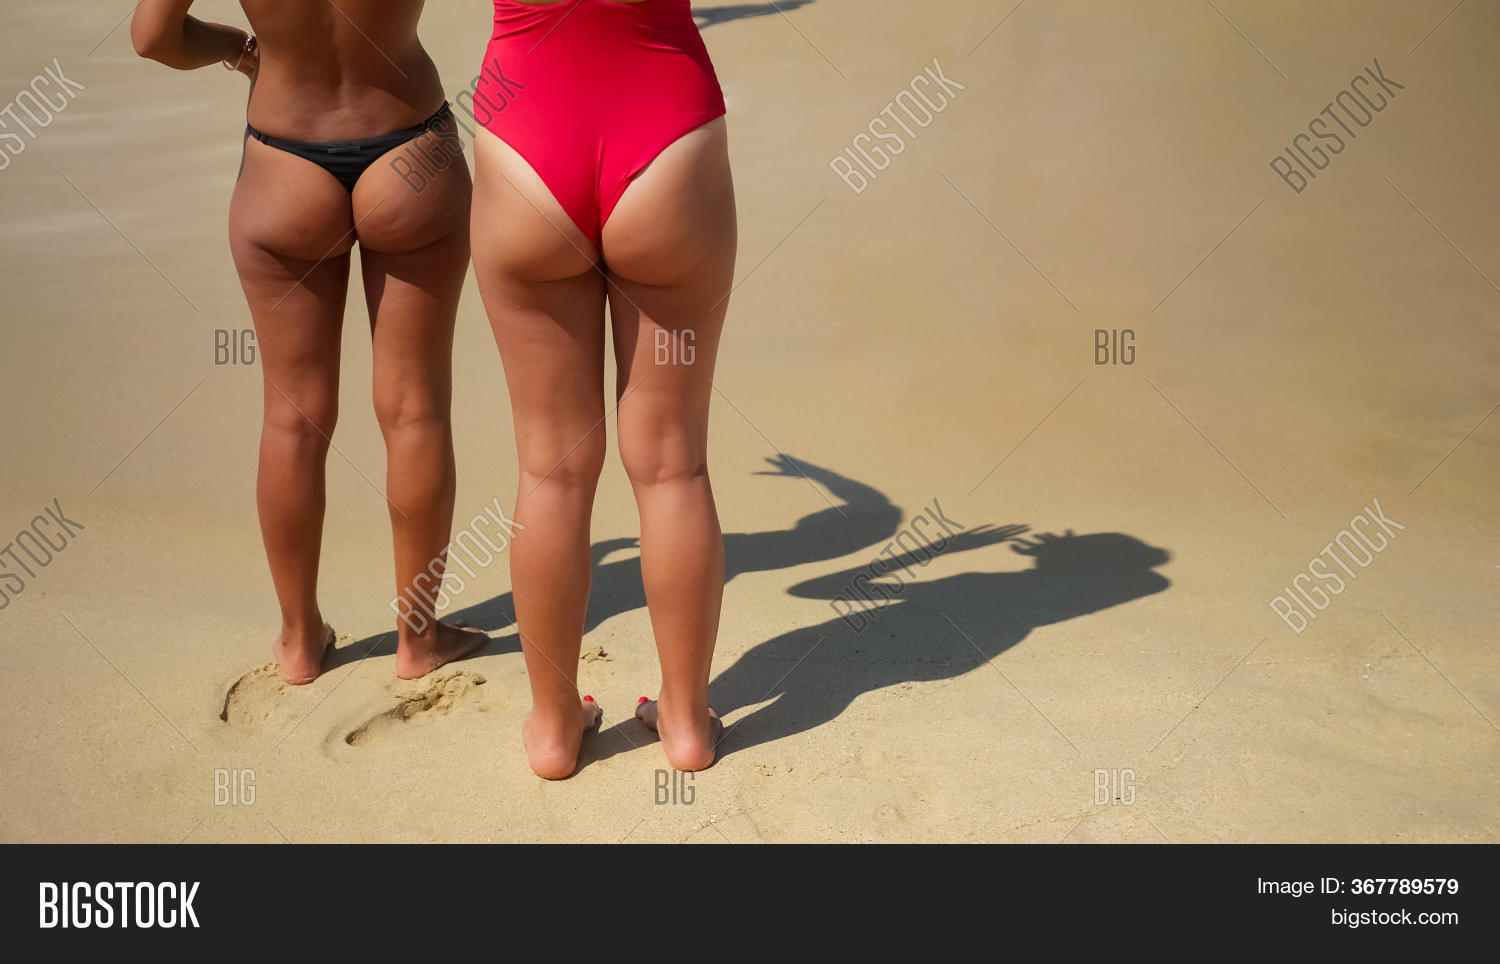 abbas fathel add photo bare beach girls